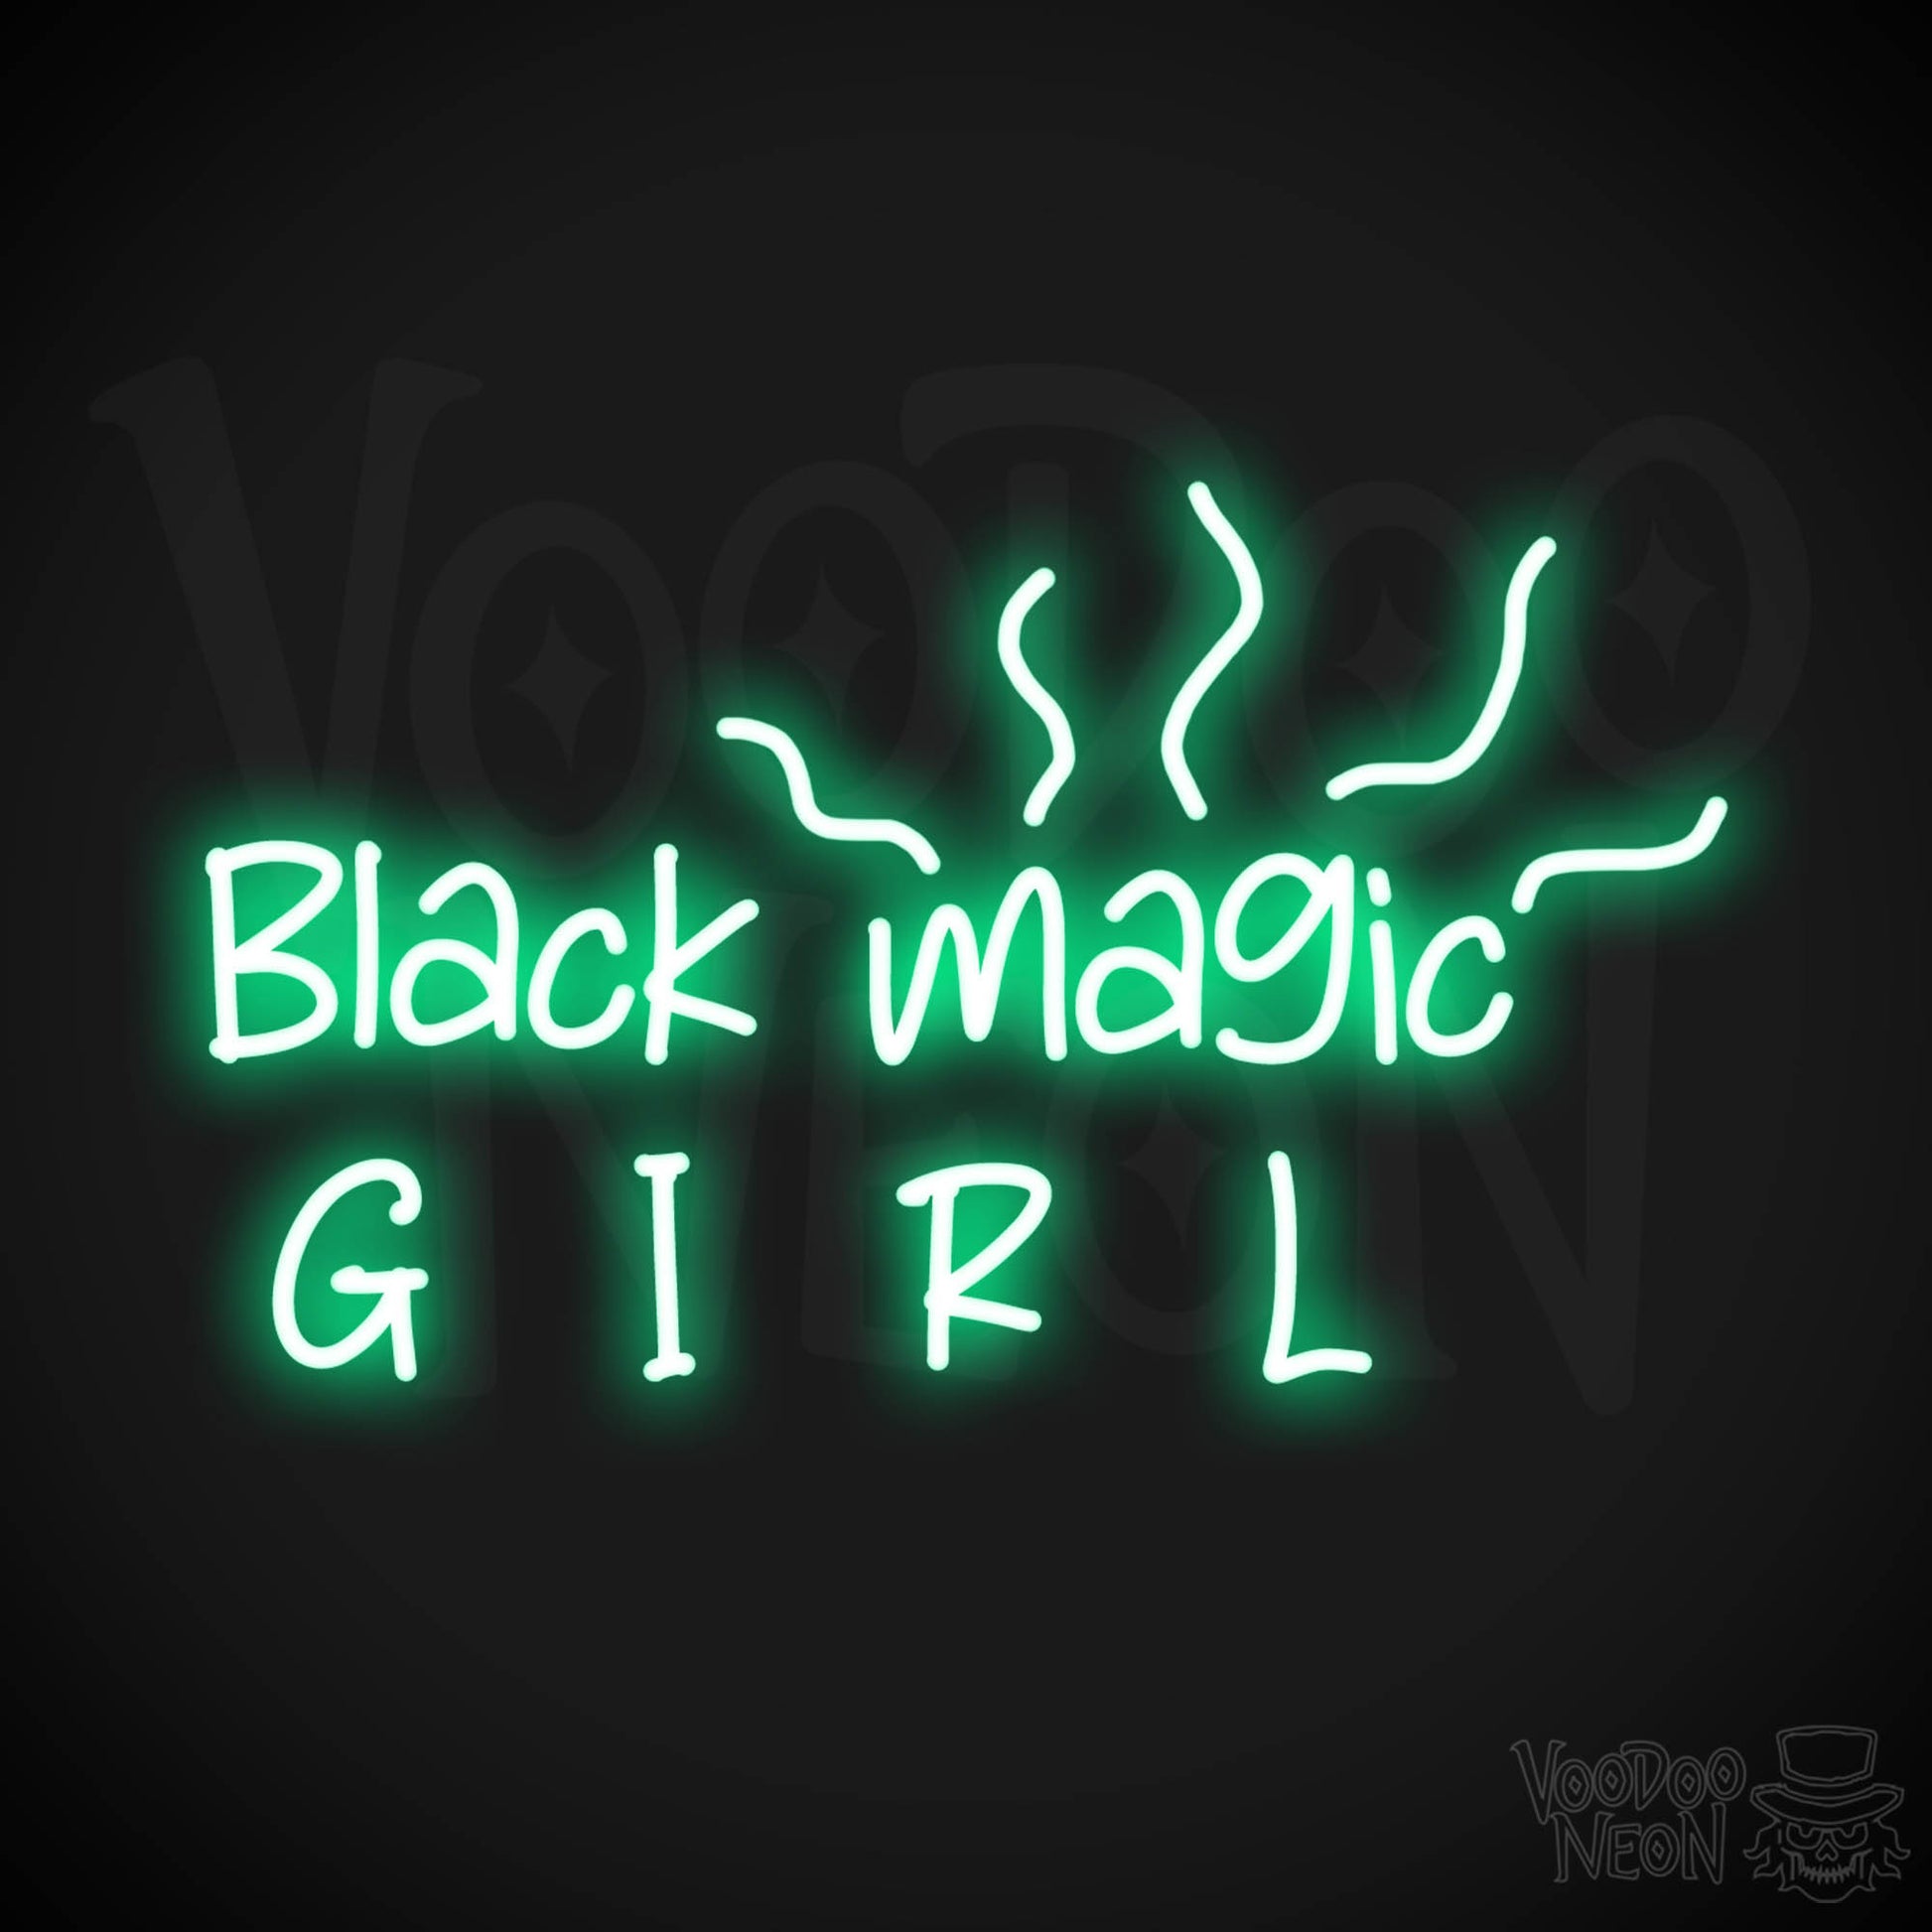 Black Magic Girl LED Neon - Green